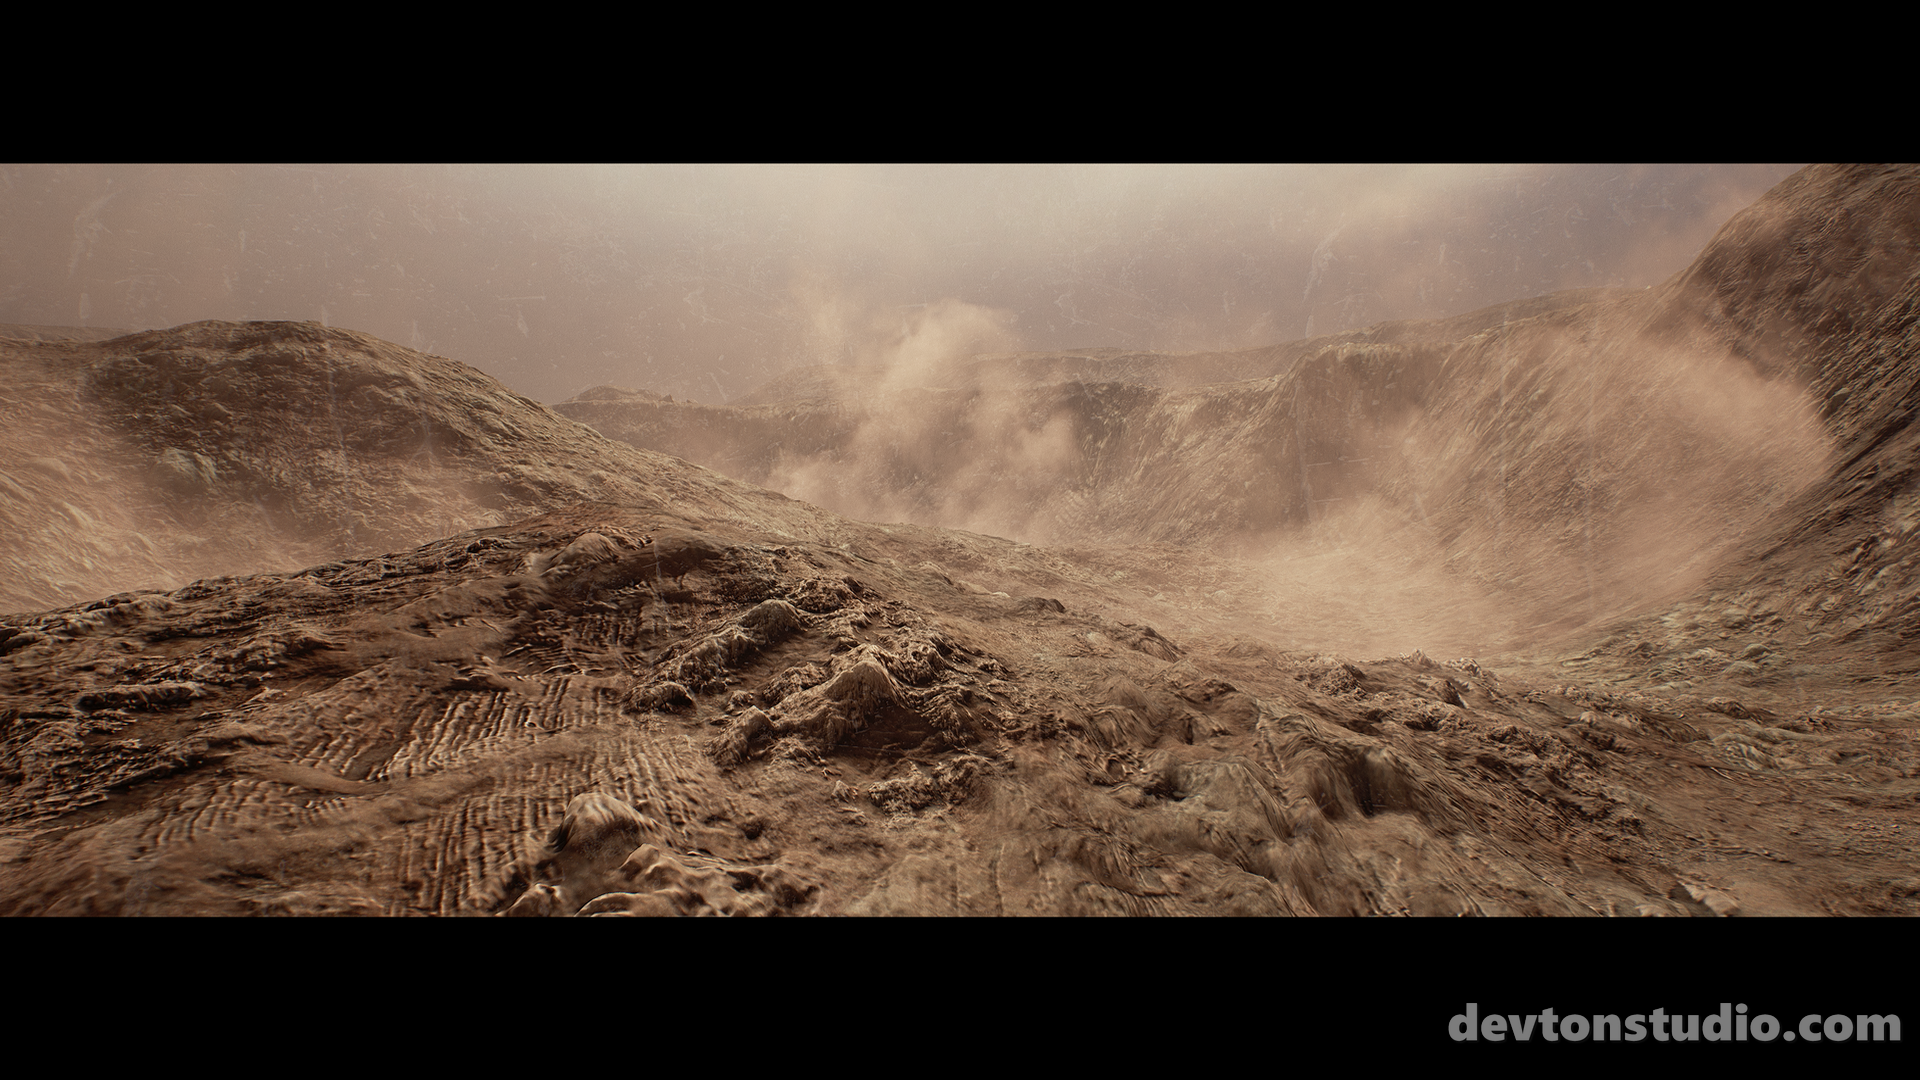 General 1920x1080 desert CGI Unreal Engine 4  landscape digital art watermarked